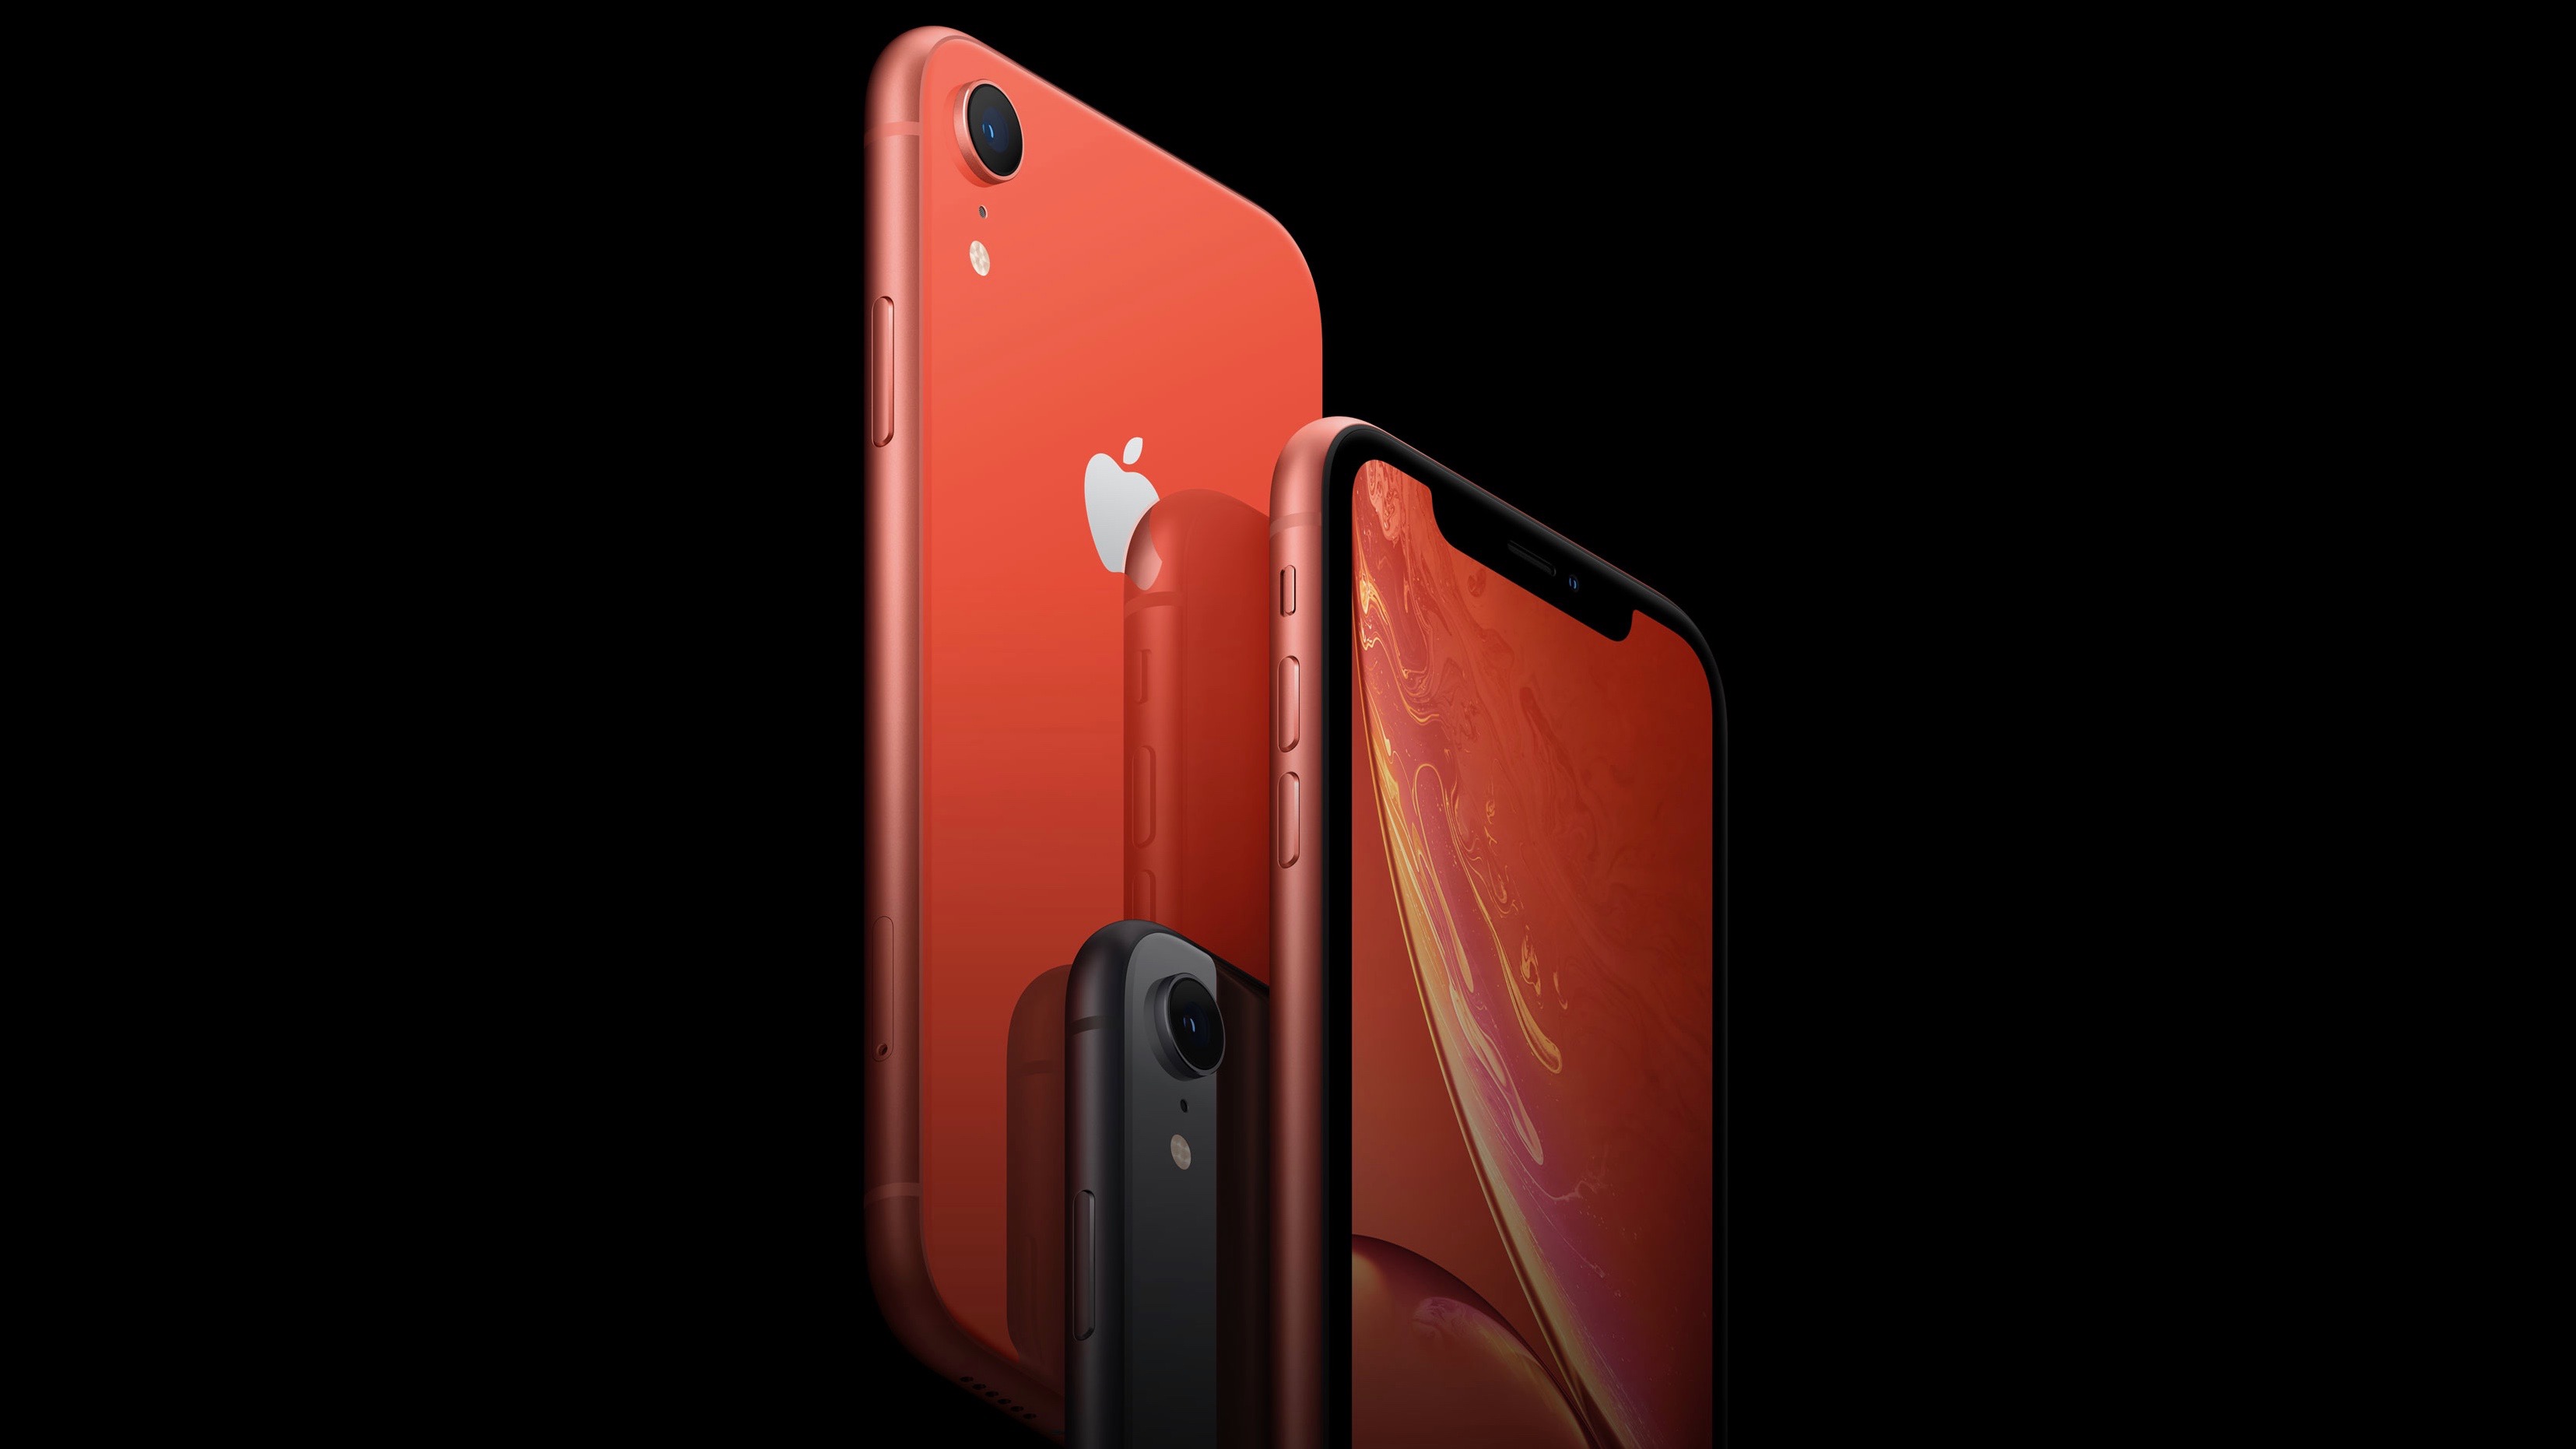 Wallpaper iPhone XR red black 5K smartphone Apple September 2018  Event HiTech 20350